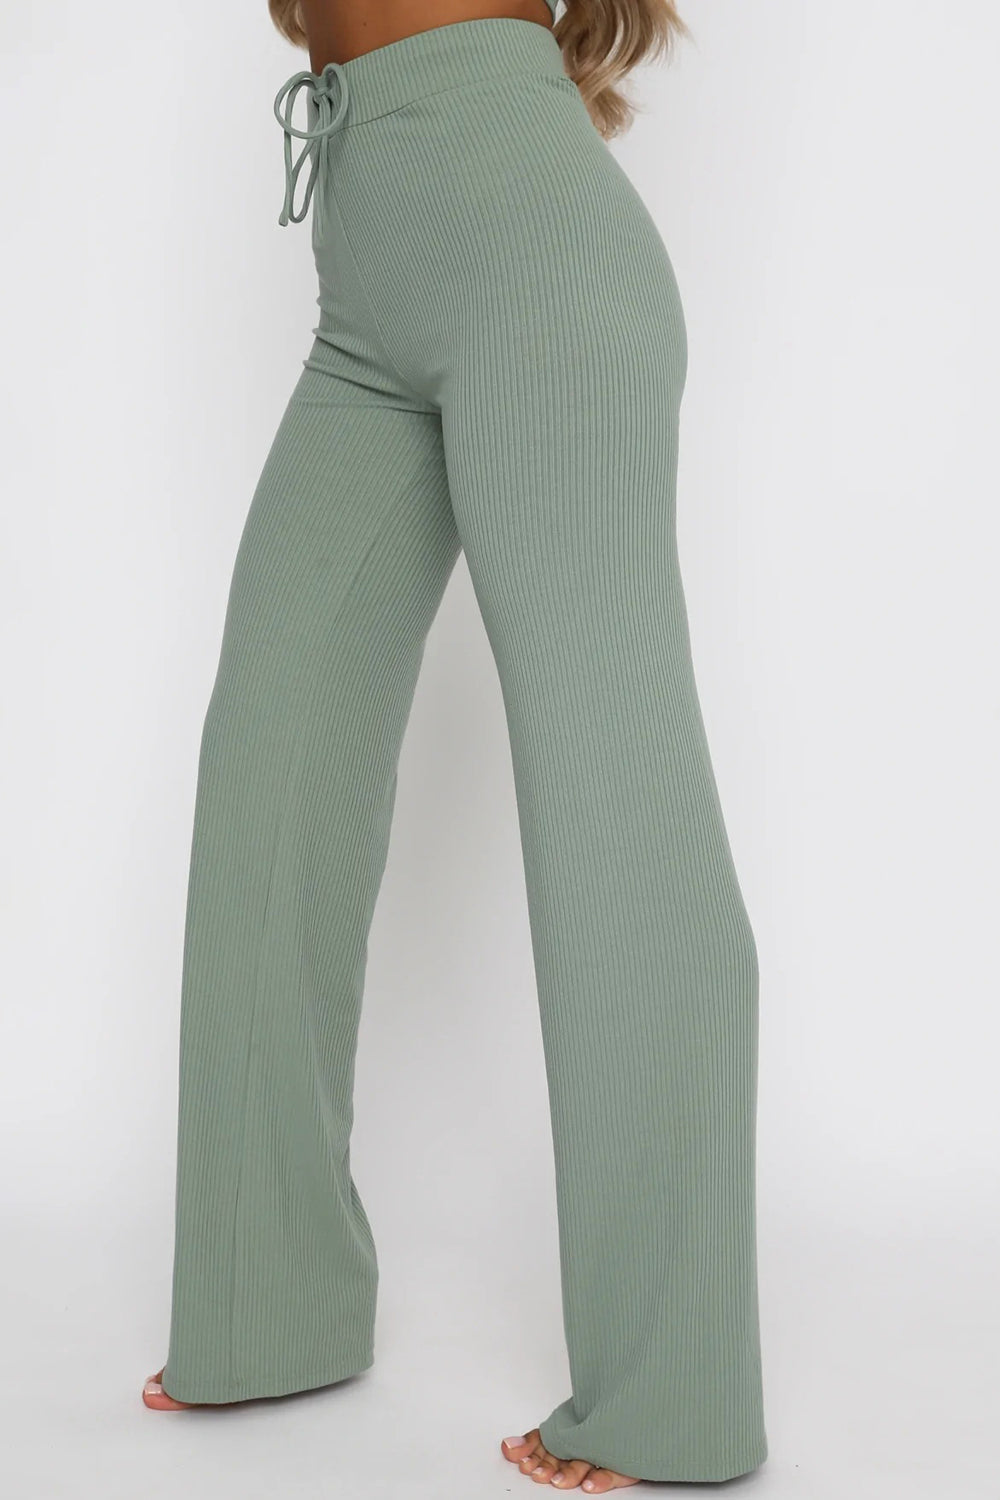 GYPSY-Short Sleeve Top and Pants Set